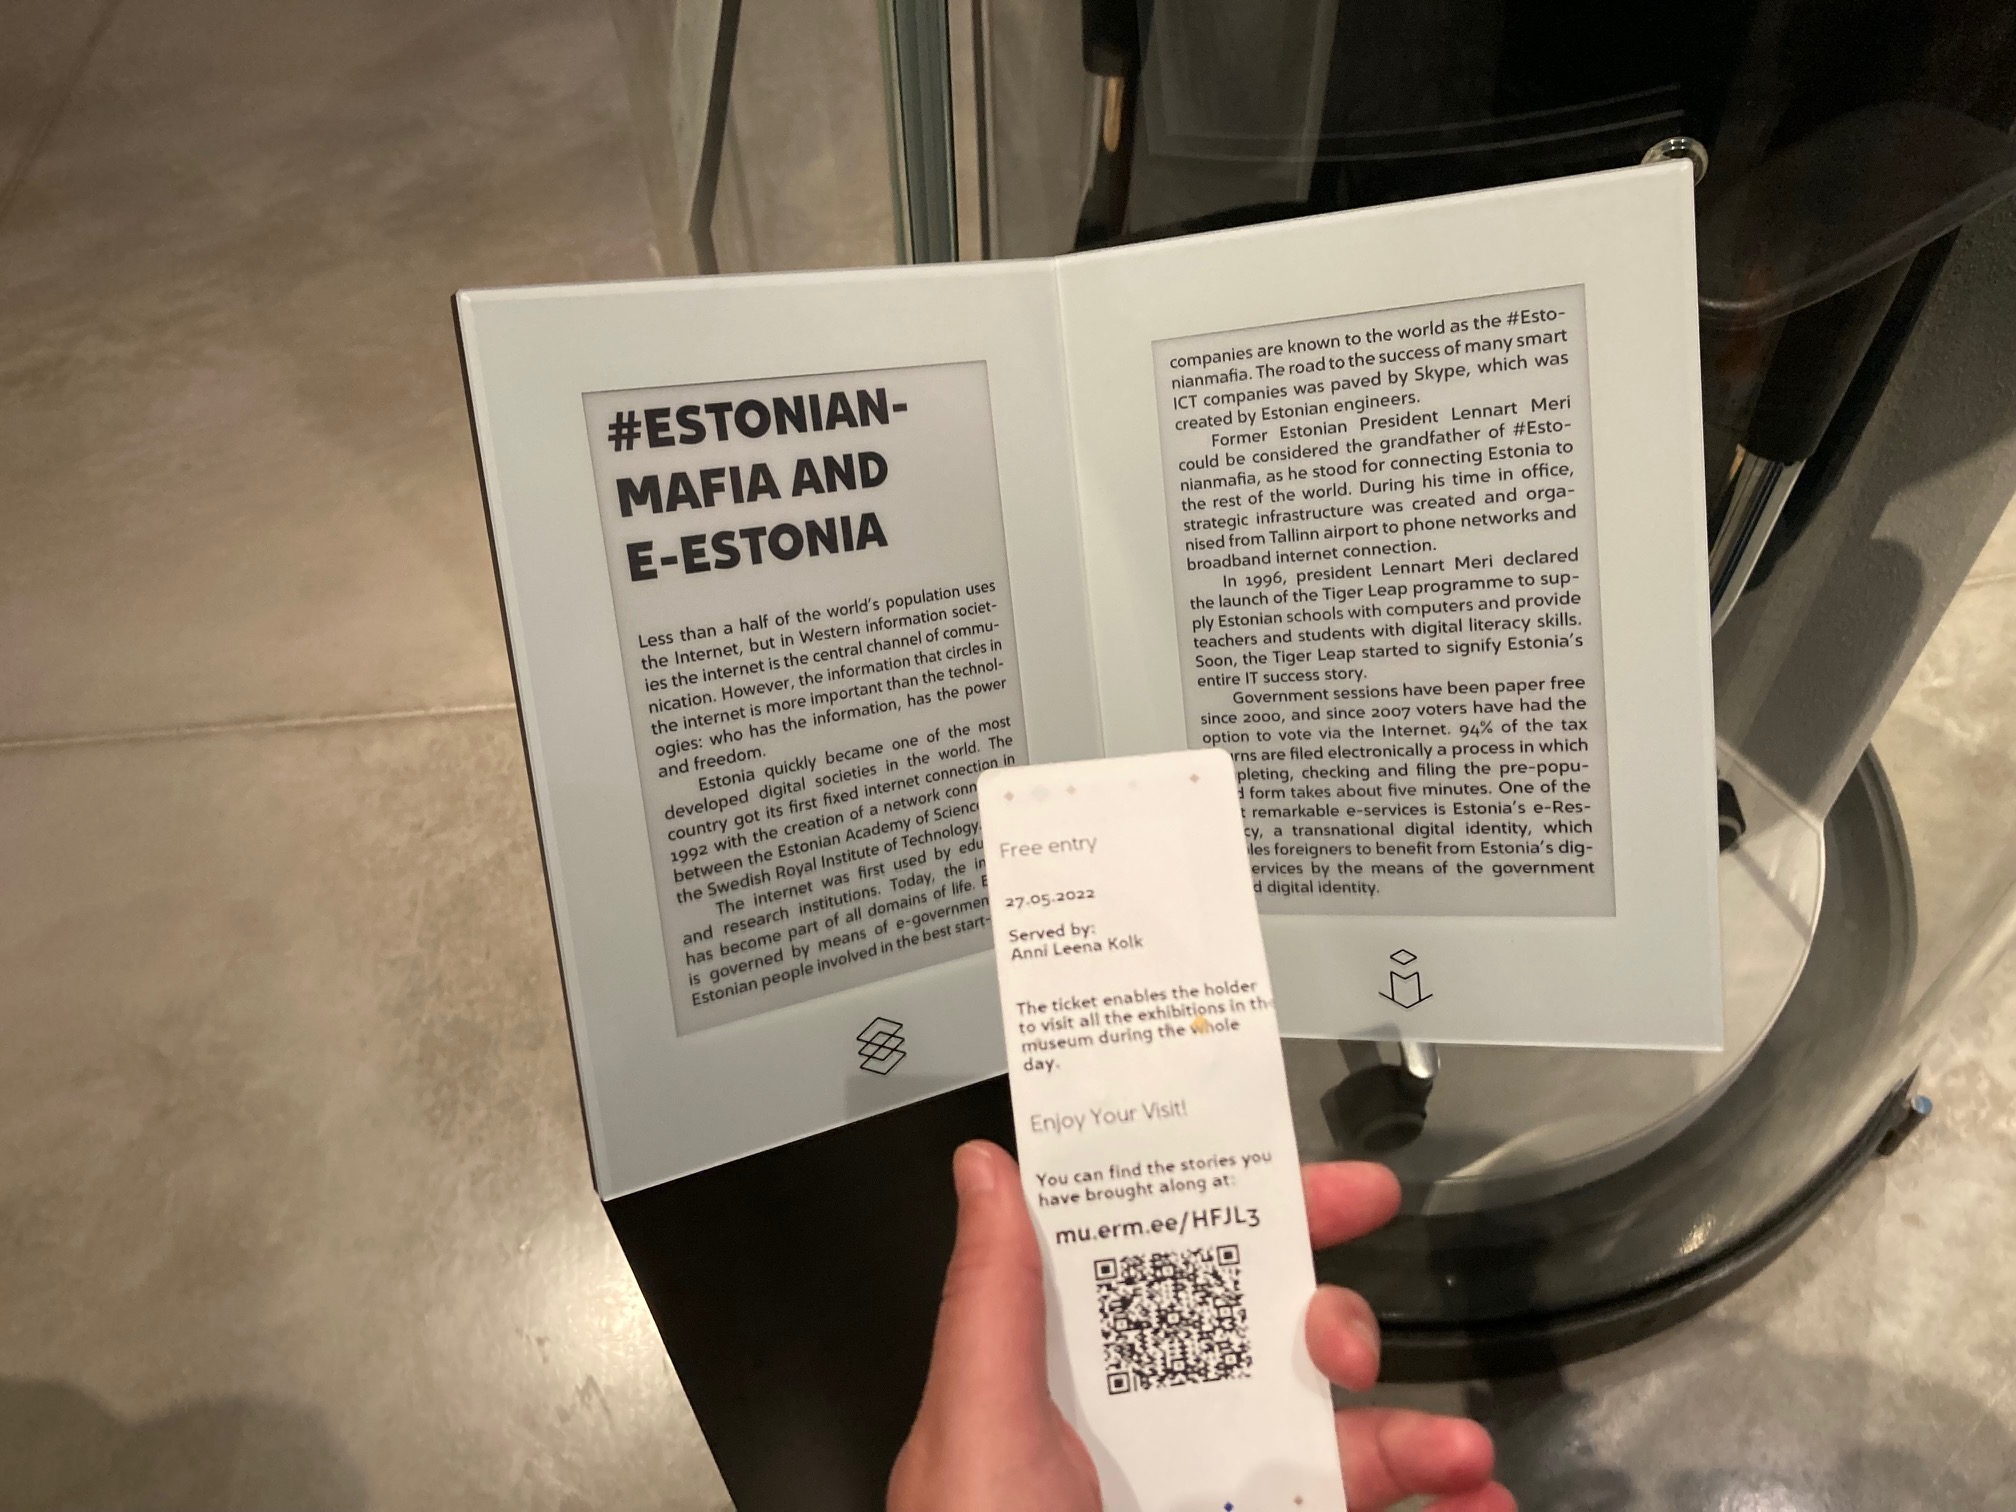 Electronic ticket at Estonia national museum